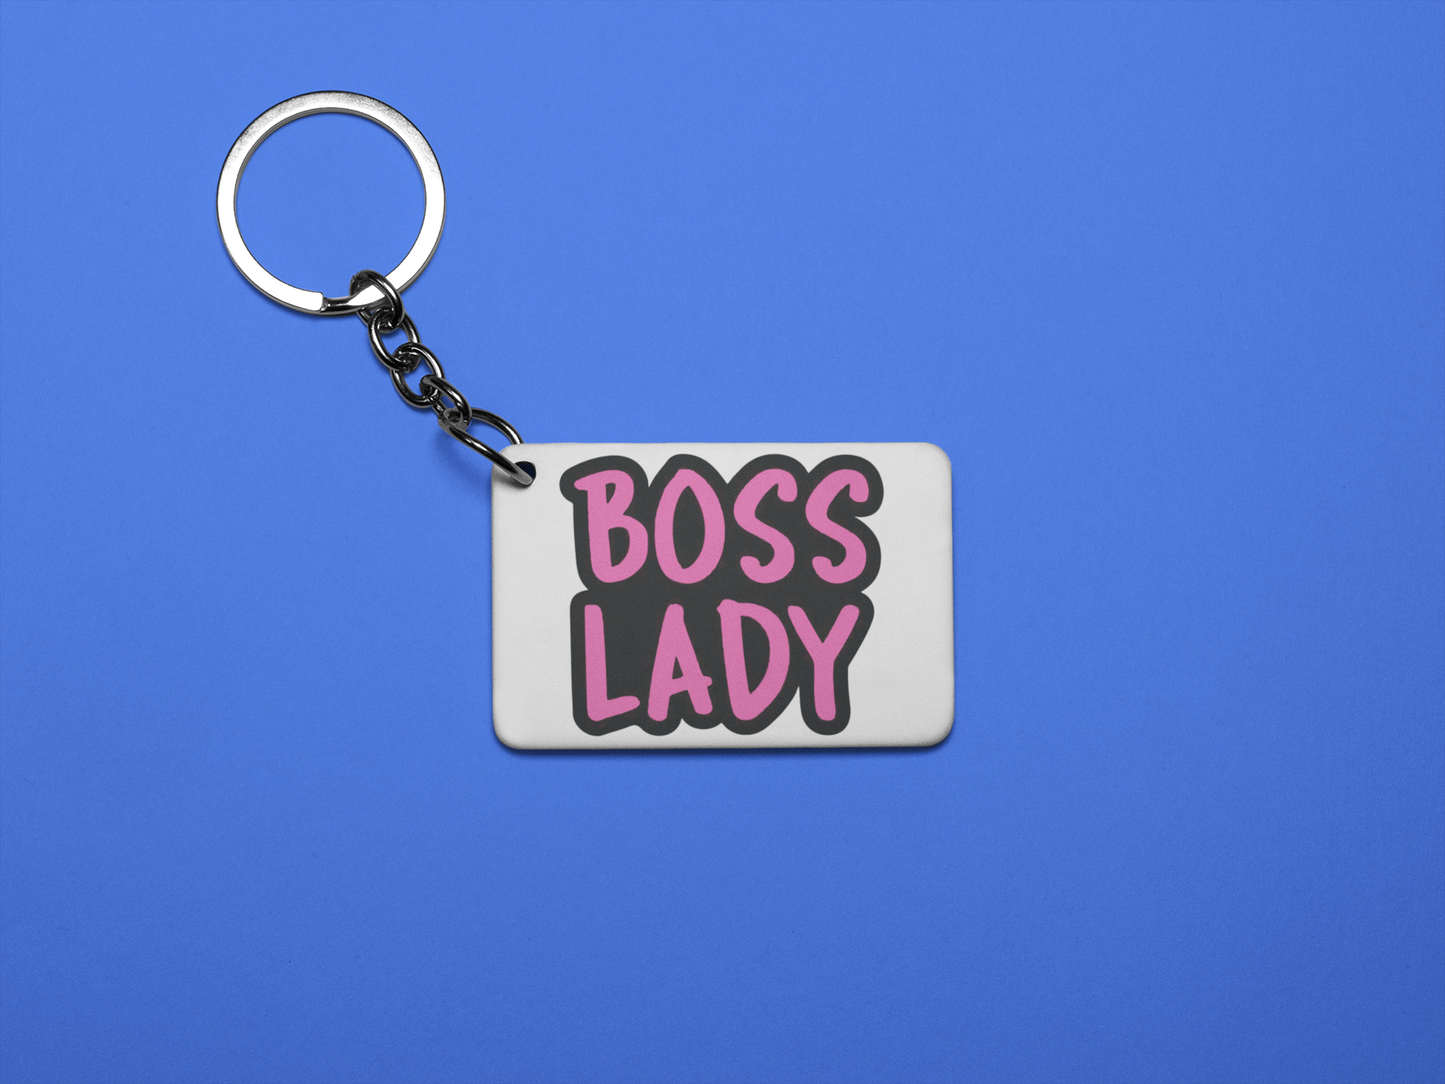 Boss lady keychain